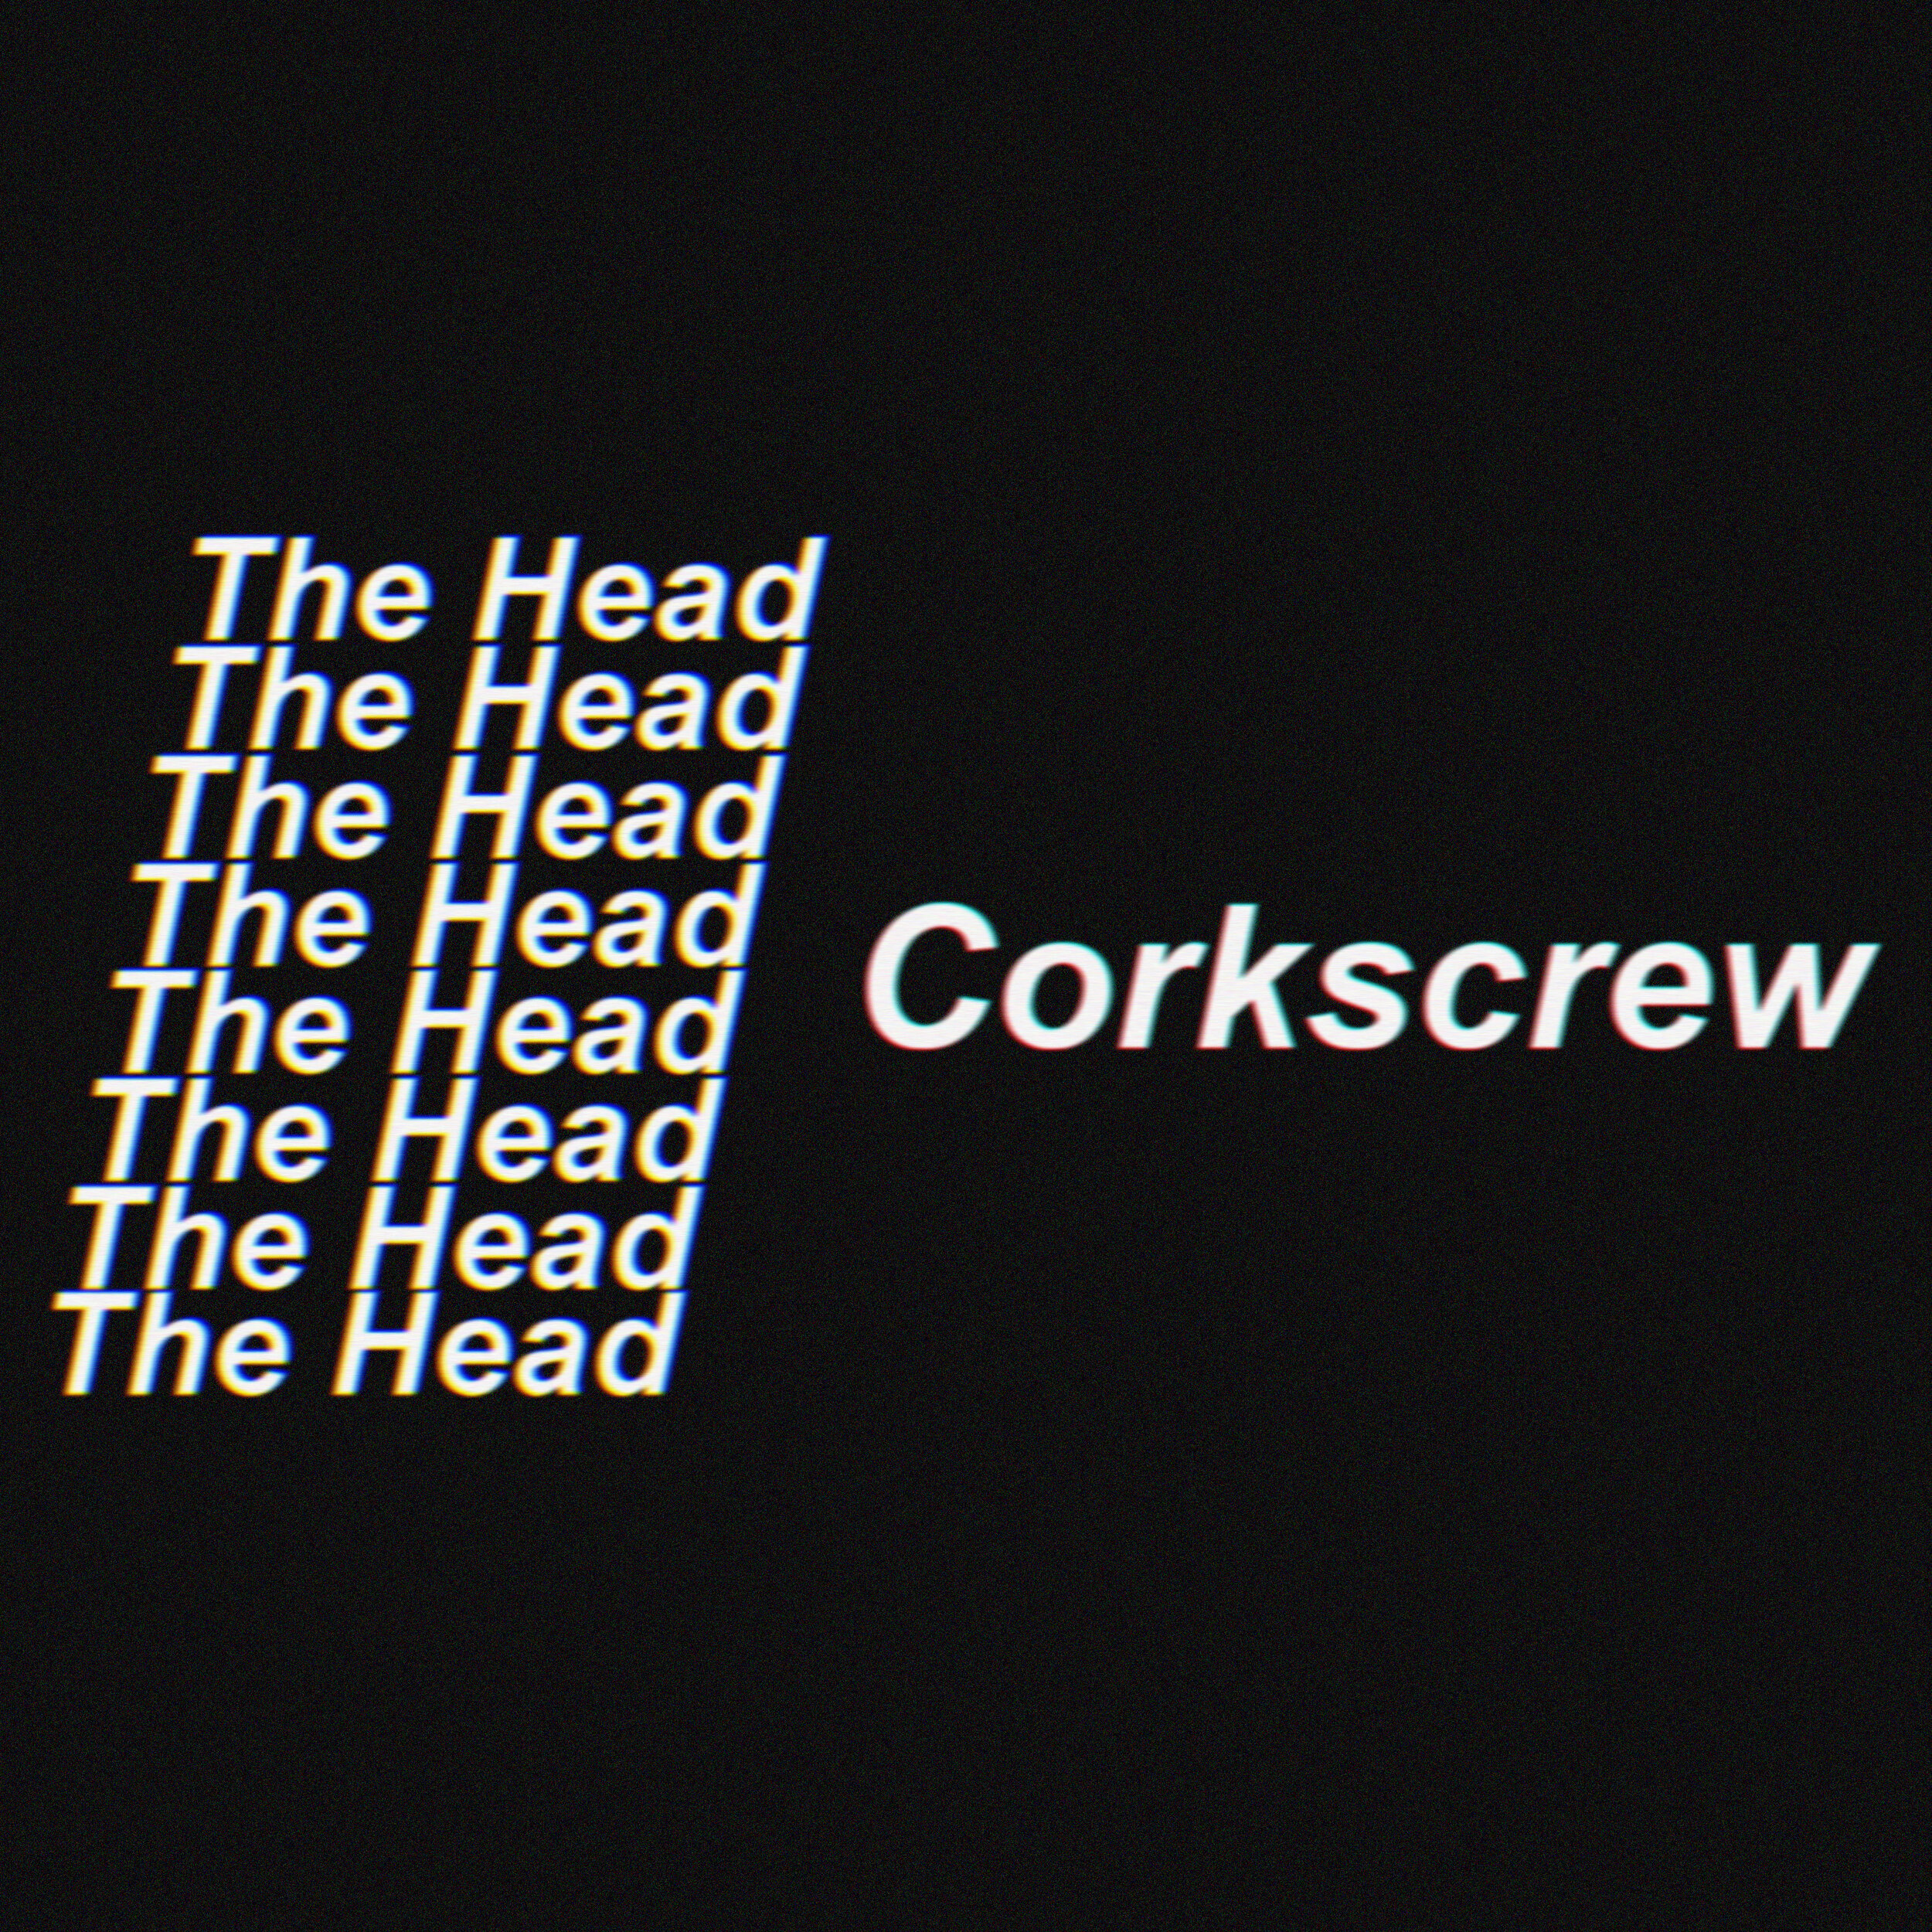 Corckscrew_Cover (3).jpg